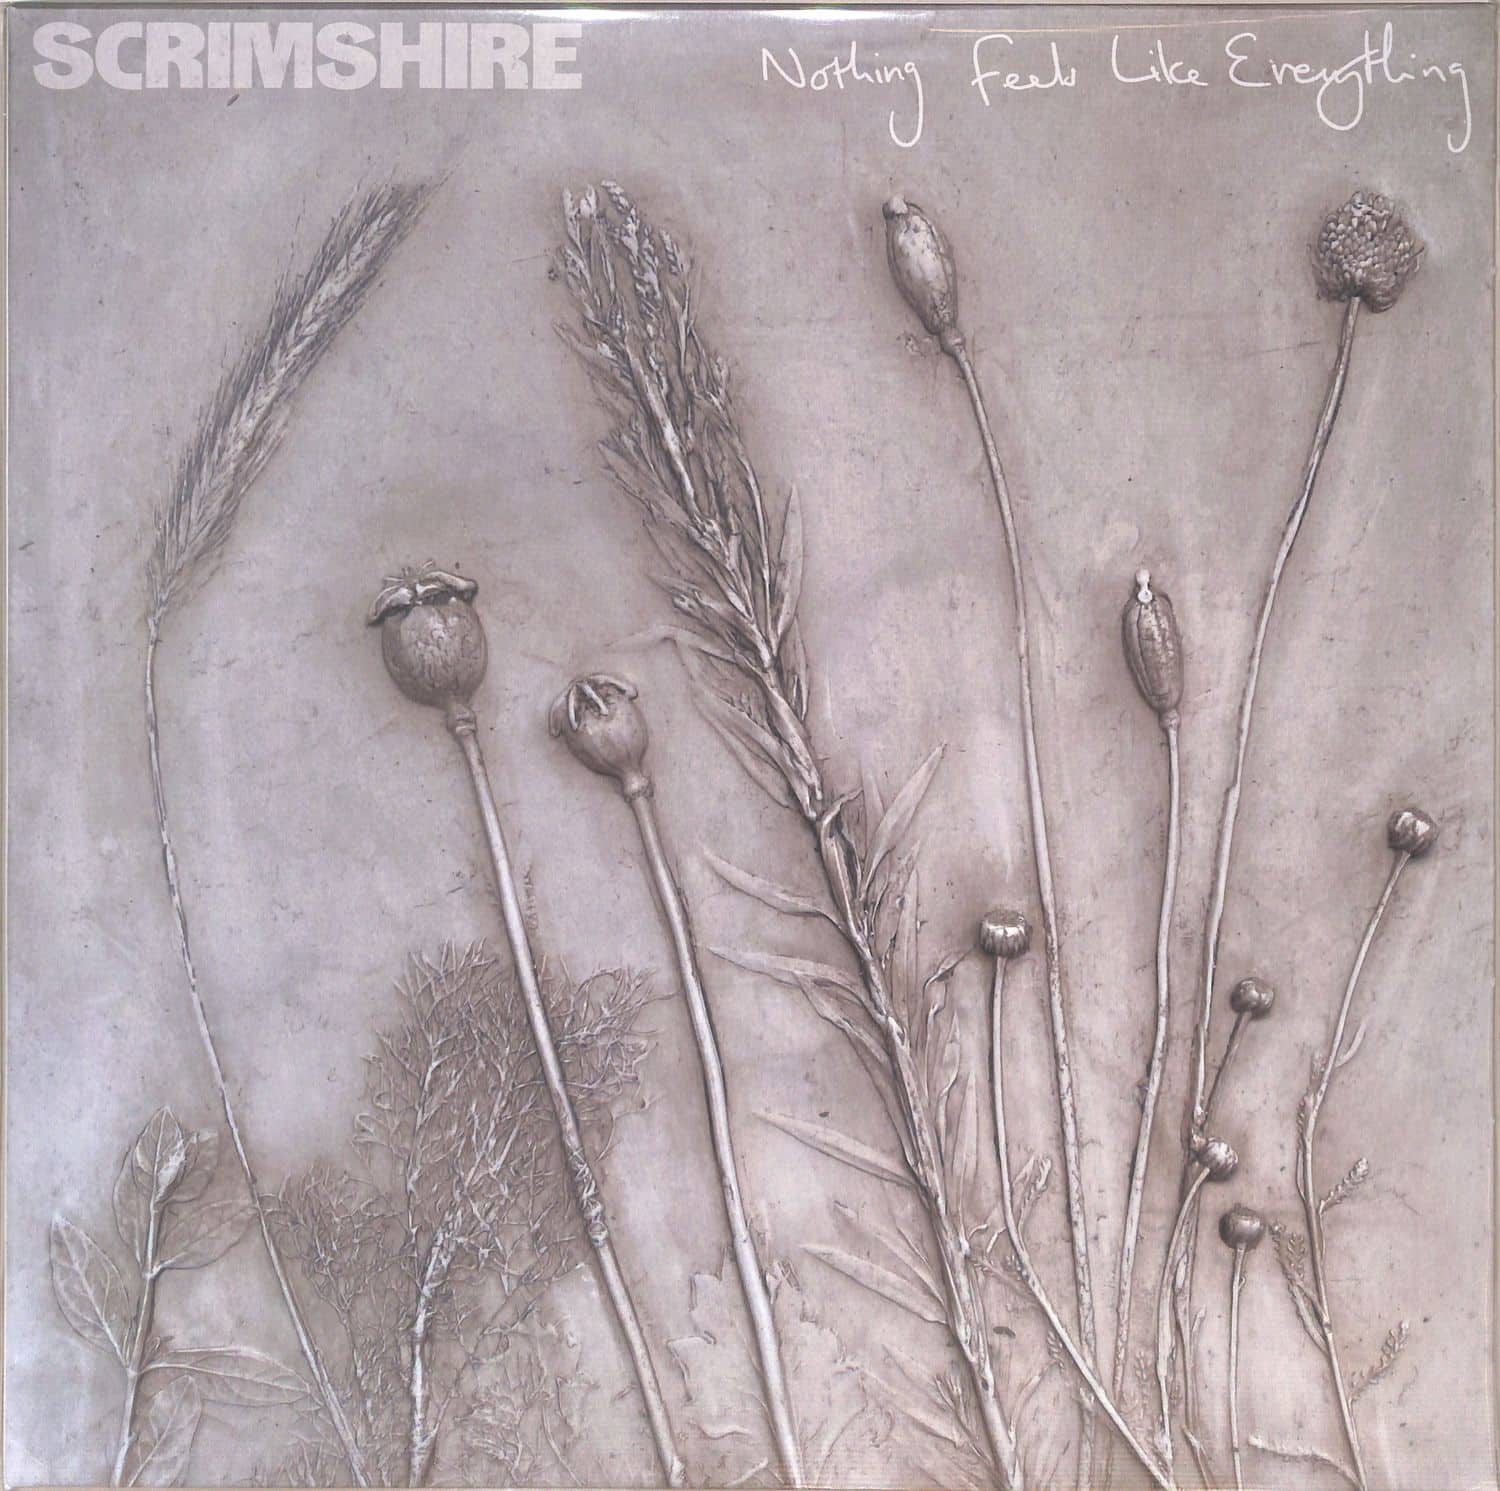 Scrimshire - NOTHING FEELS LIKE EVERYTHING 